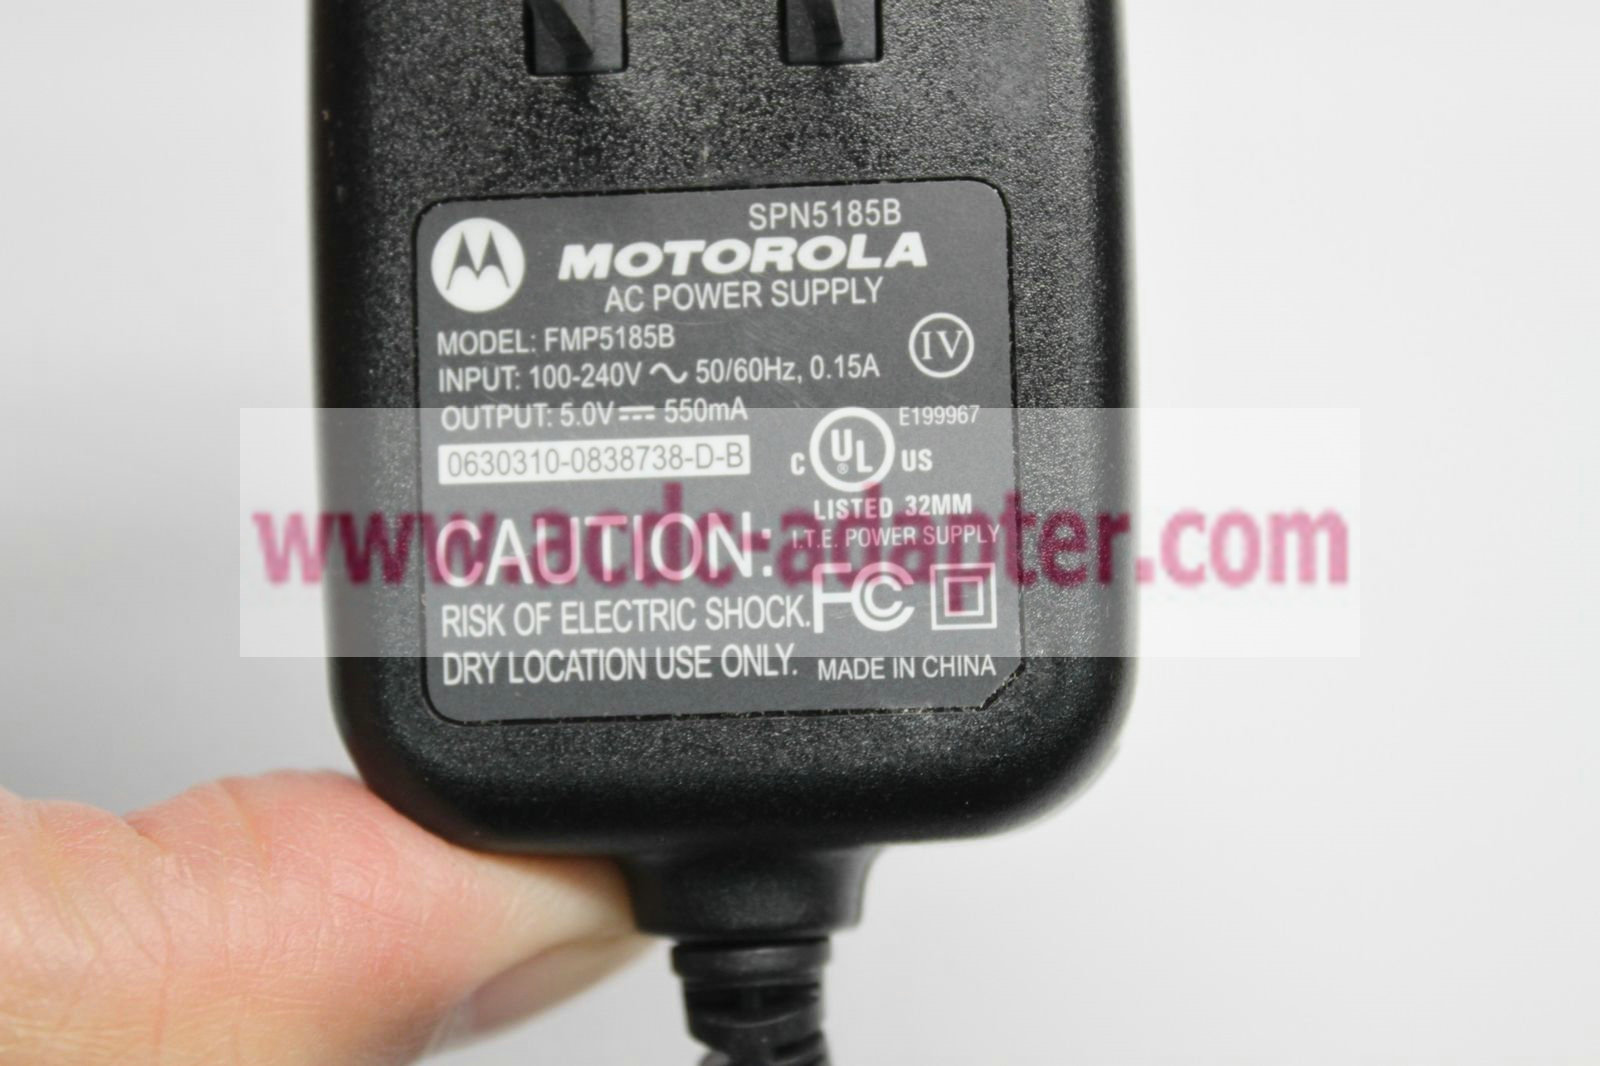 Original Motorola FMP5185B 5V 550mA 0630310-0838738-D-B Cell Phone Wall AC Adapter